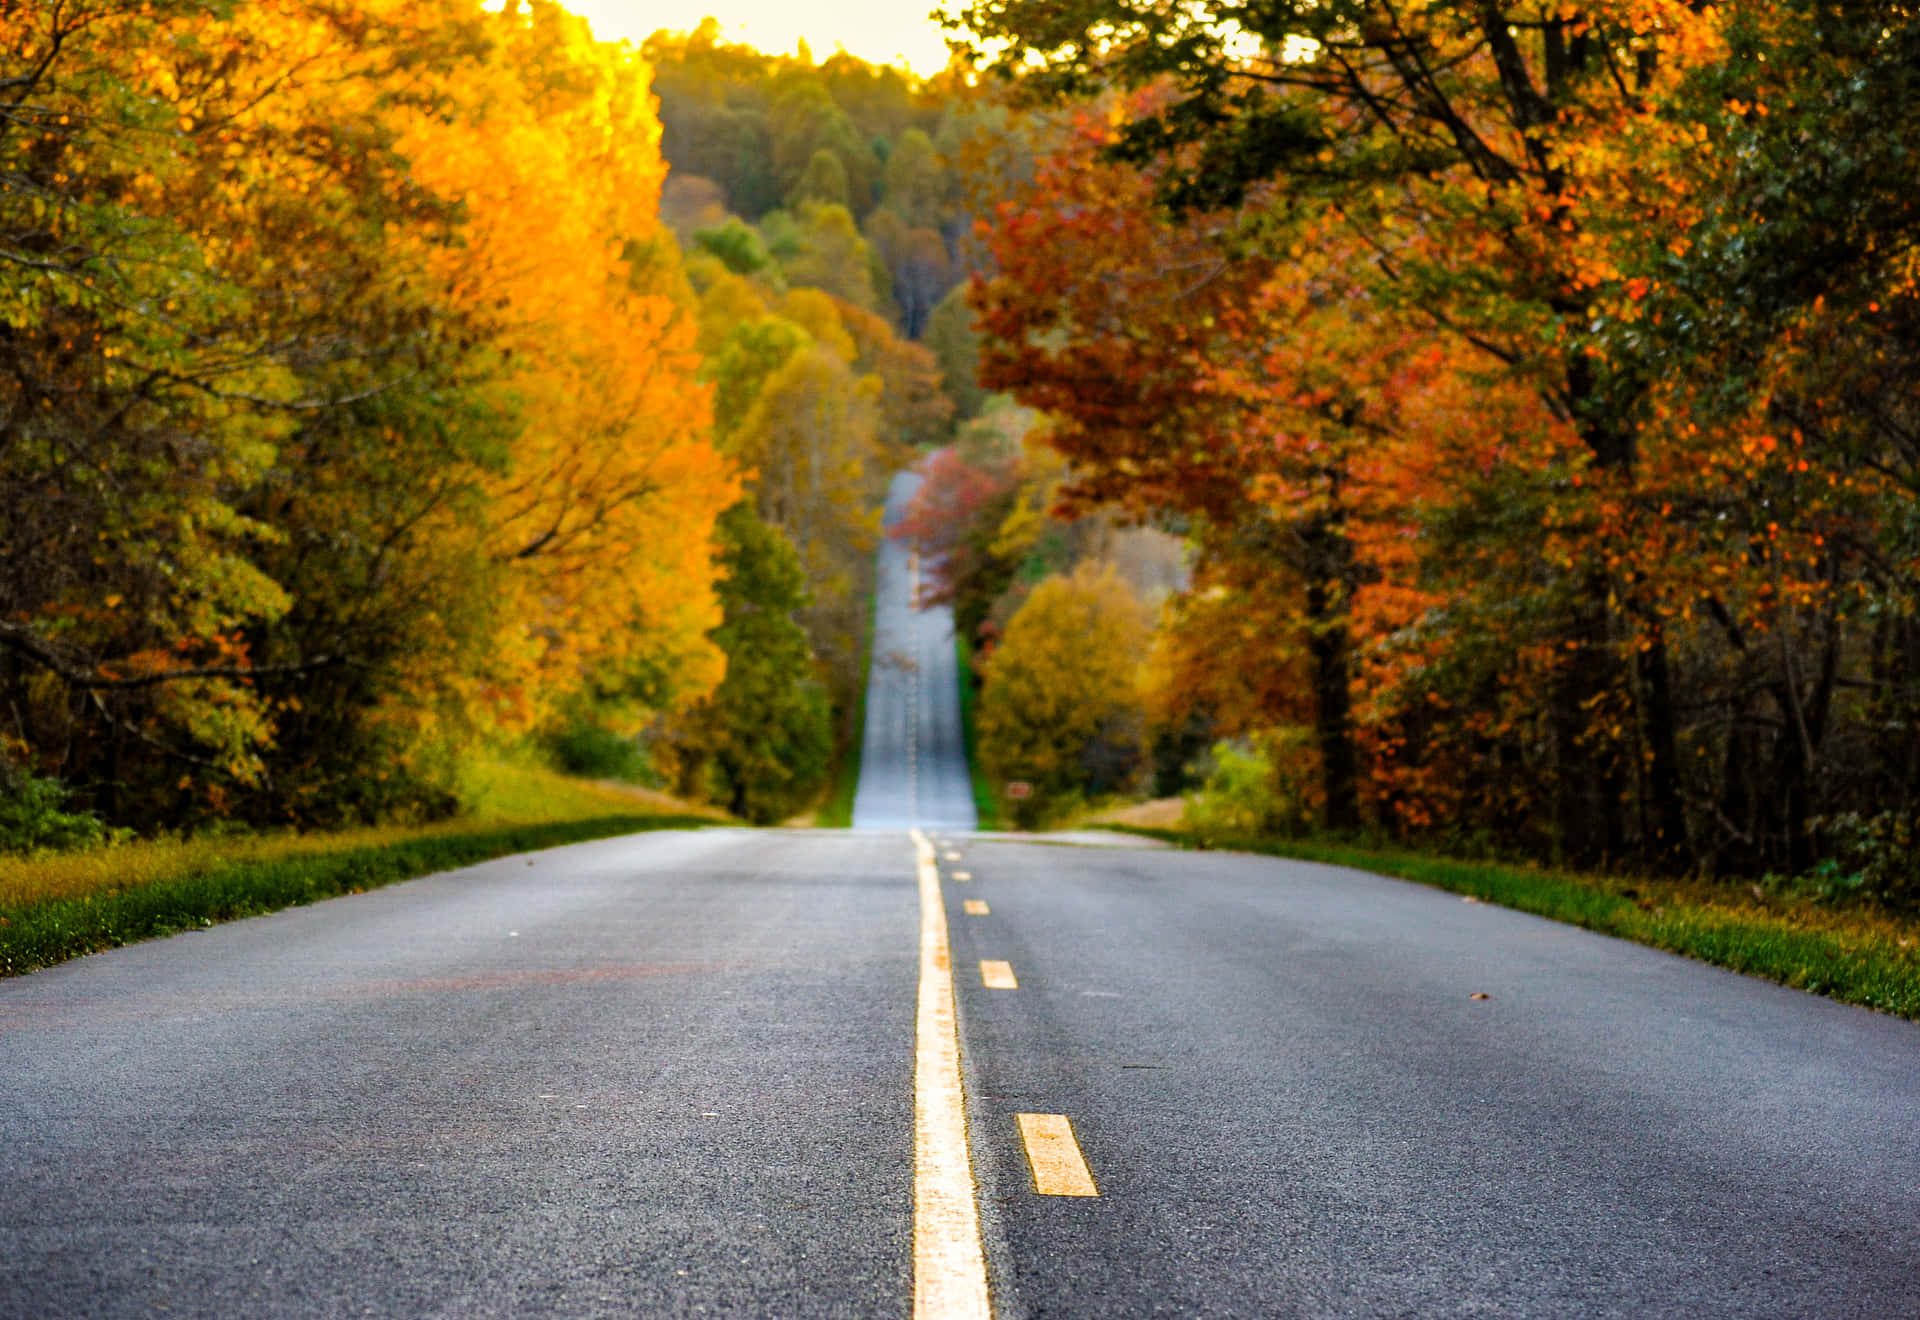 "Beautiful Autumn Drive Along The Blue Ridge Parkway" Wallpaper